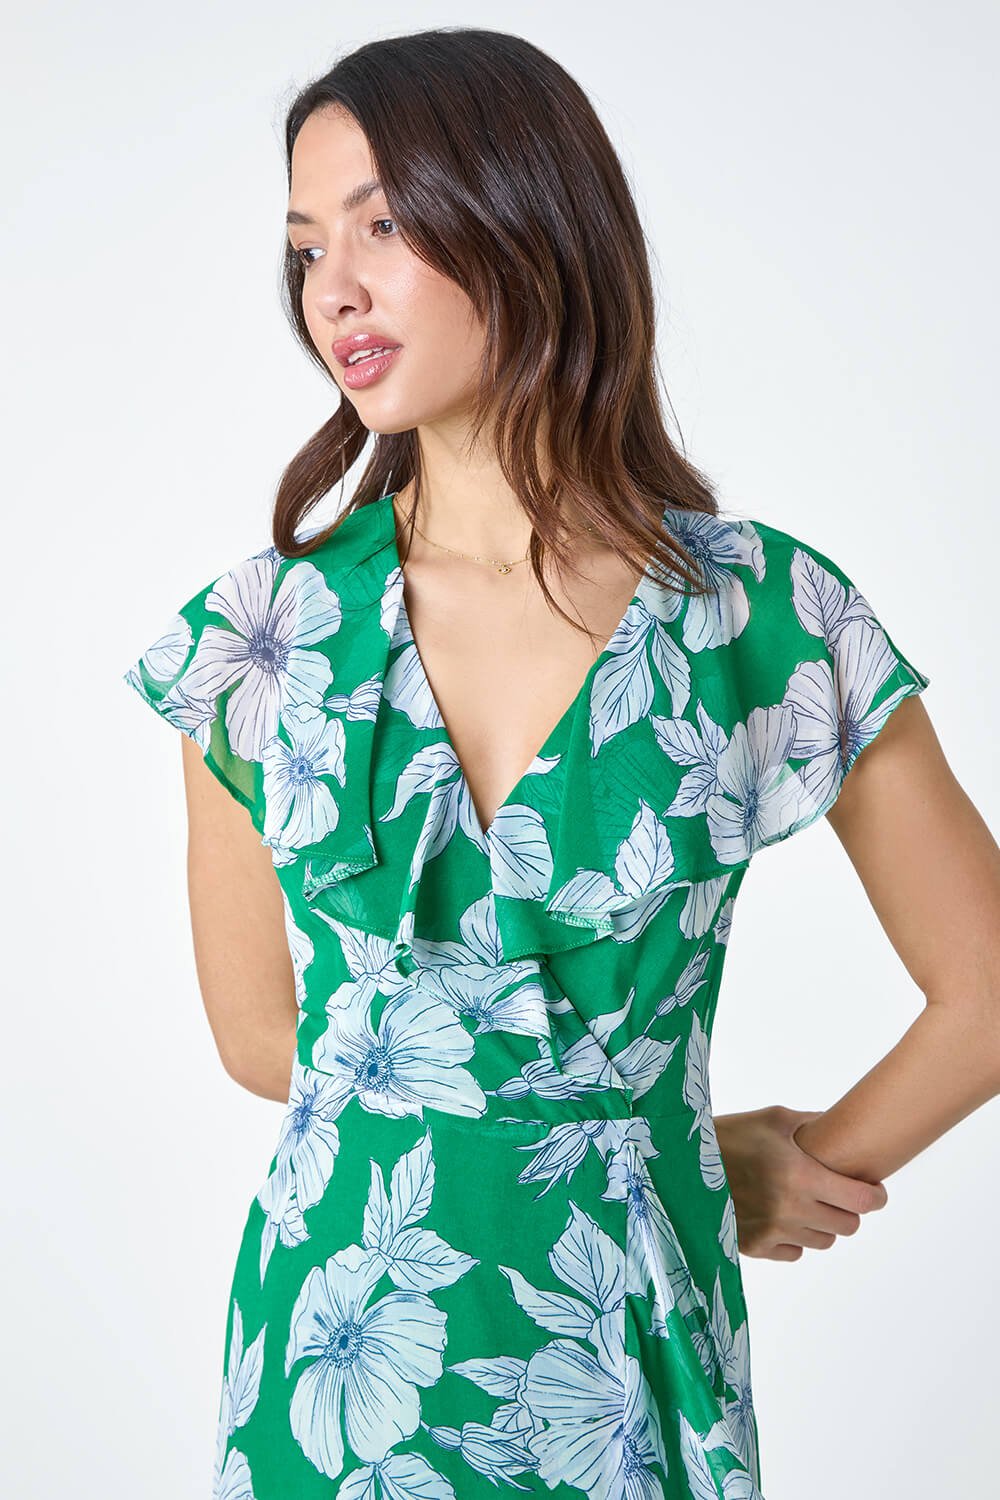 Floral Print Frill Midi Dress in Green - Roman Originals UK